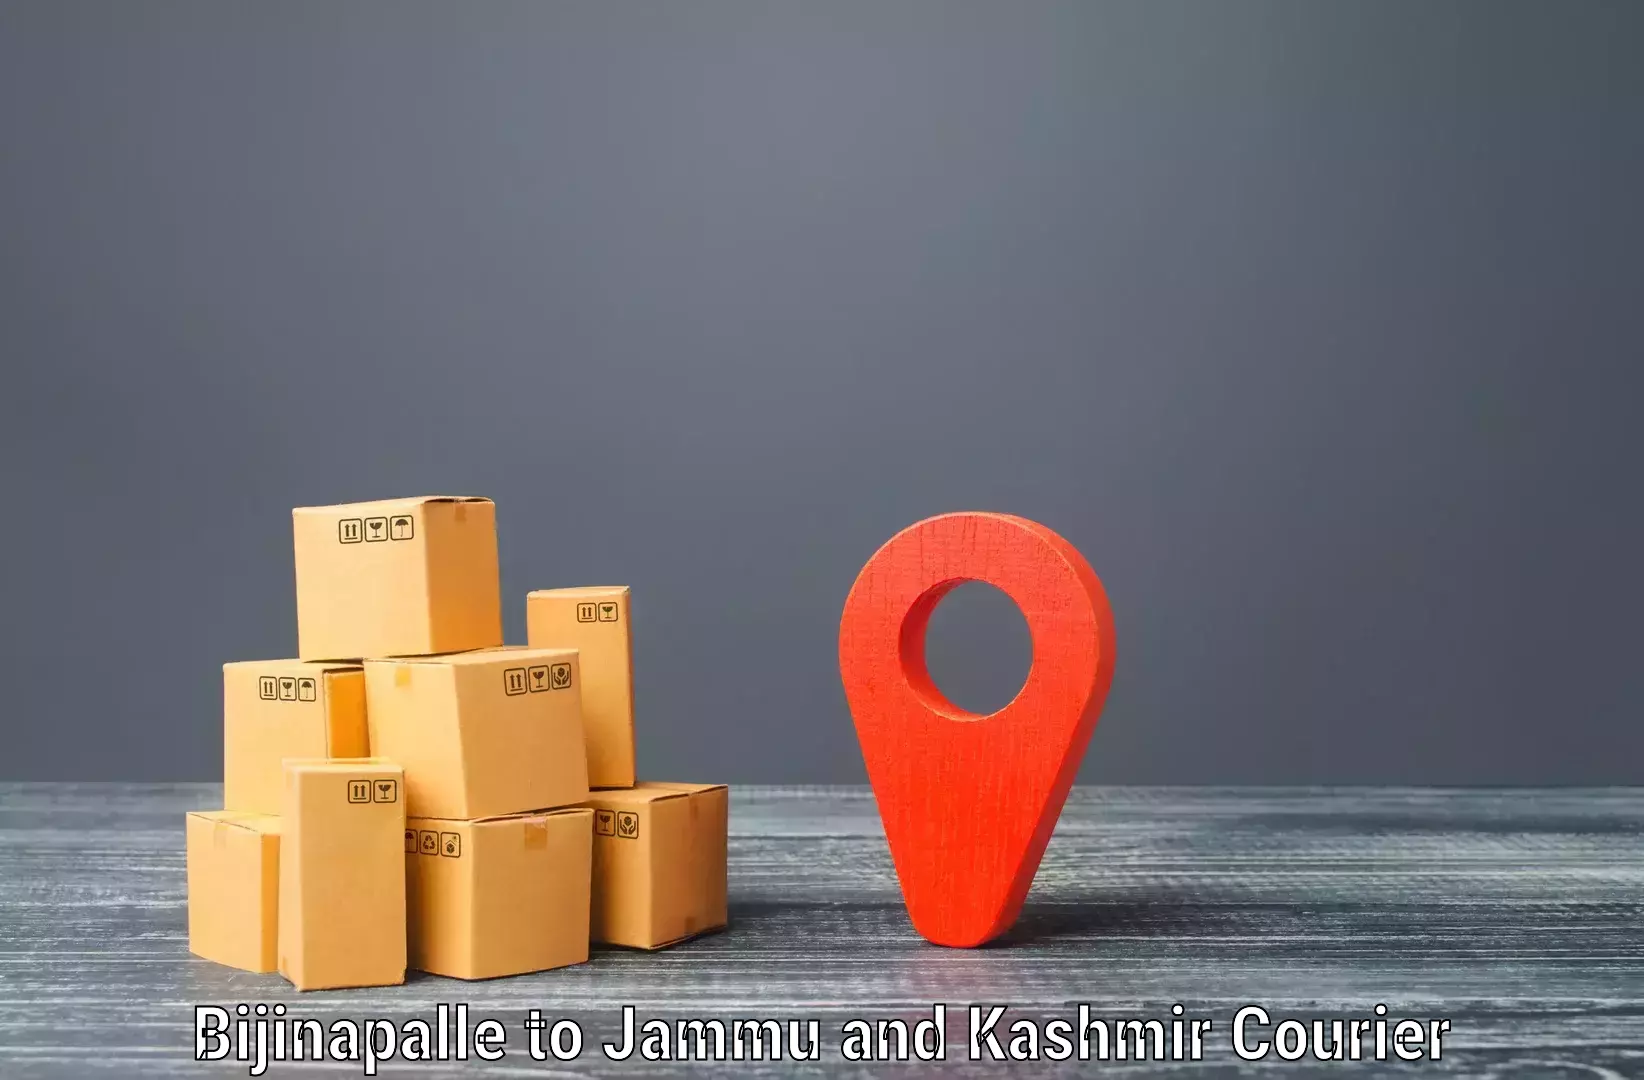 Reliable shipping partners Bijinapalle to Srinagar Kashmir